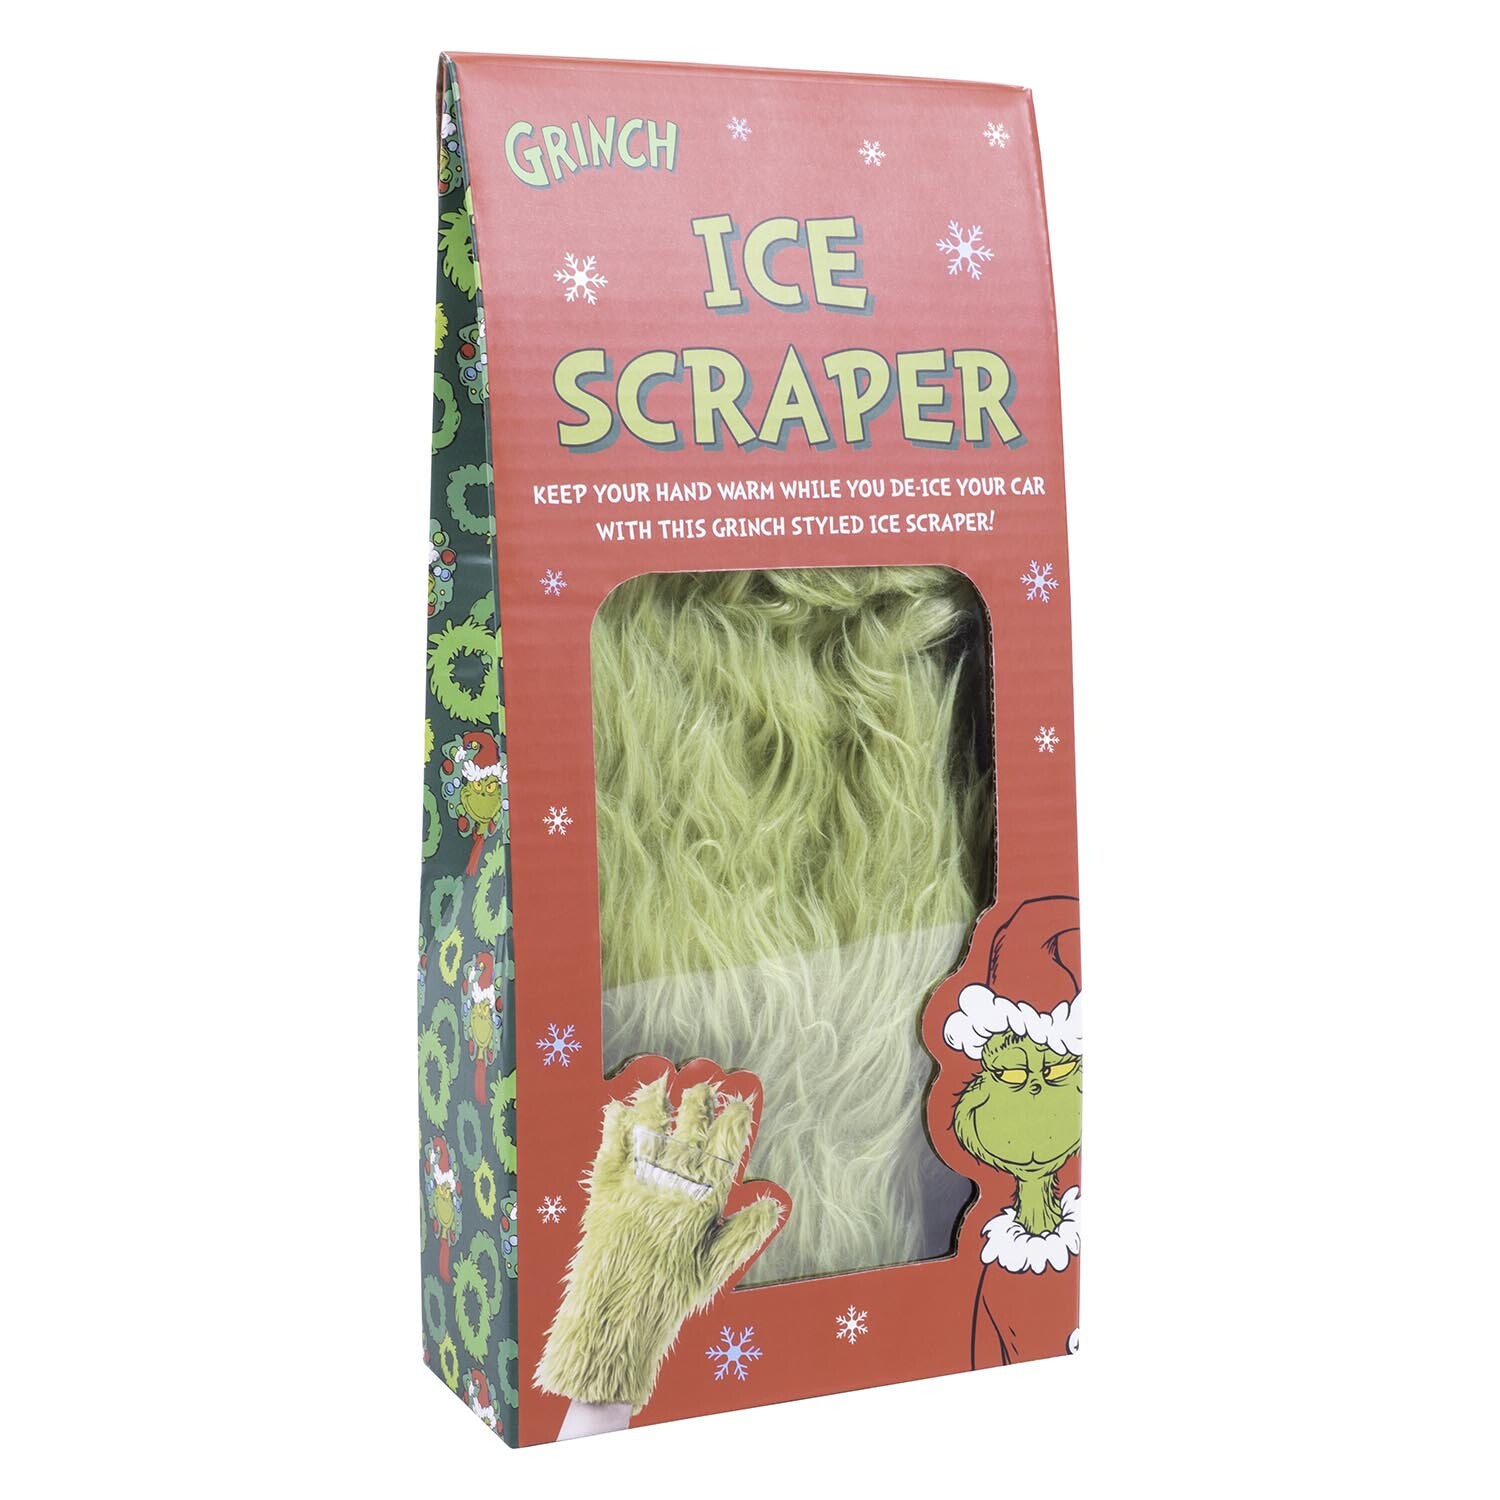 The Grinch Green Ice Scraper Image 2